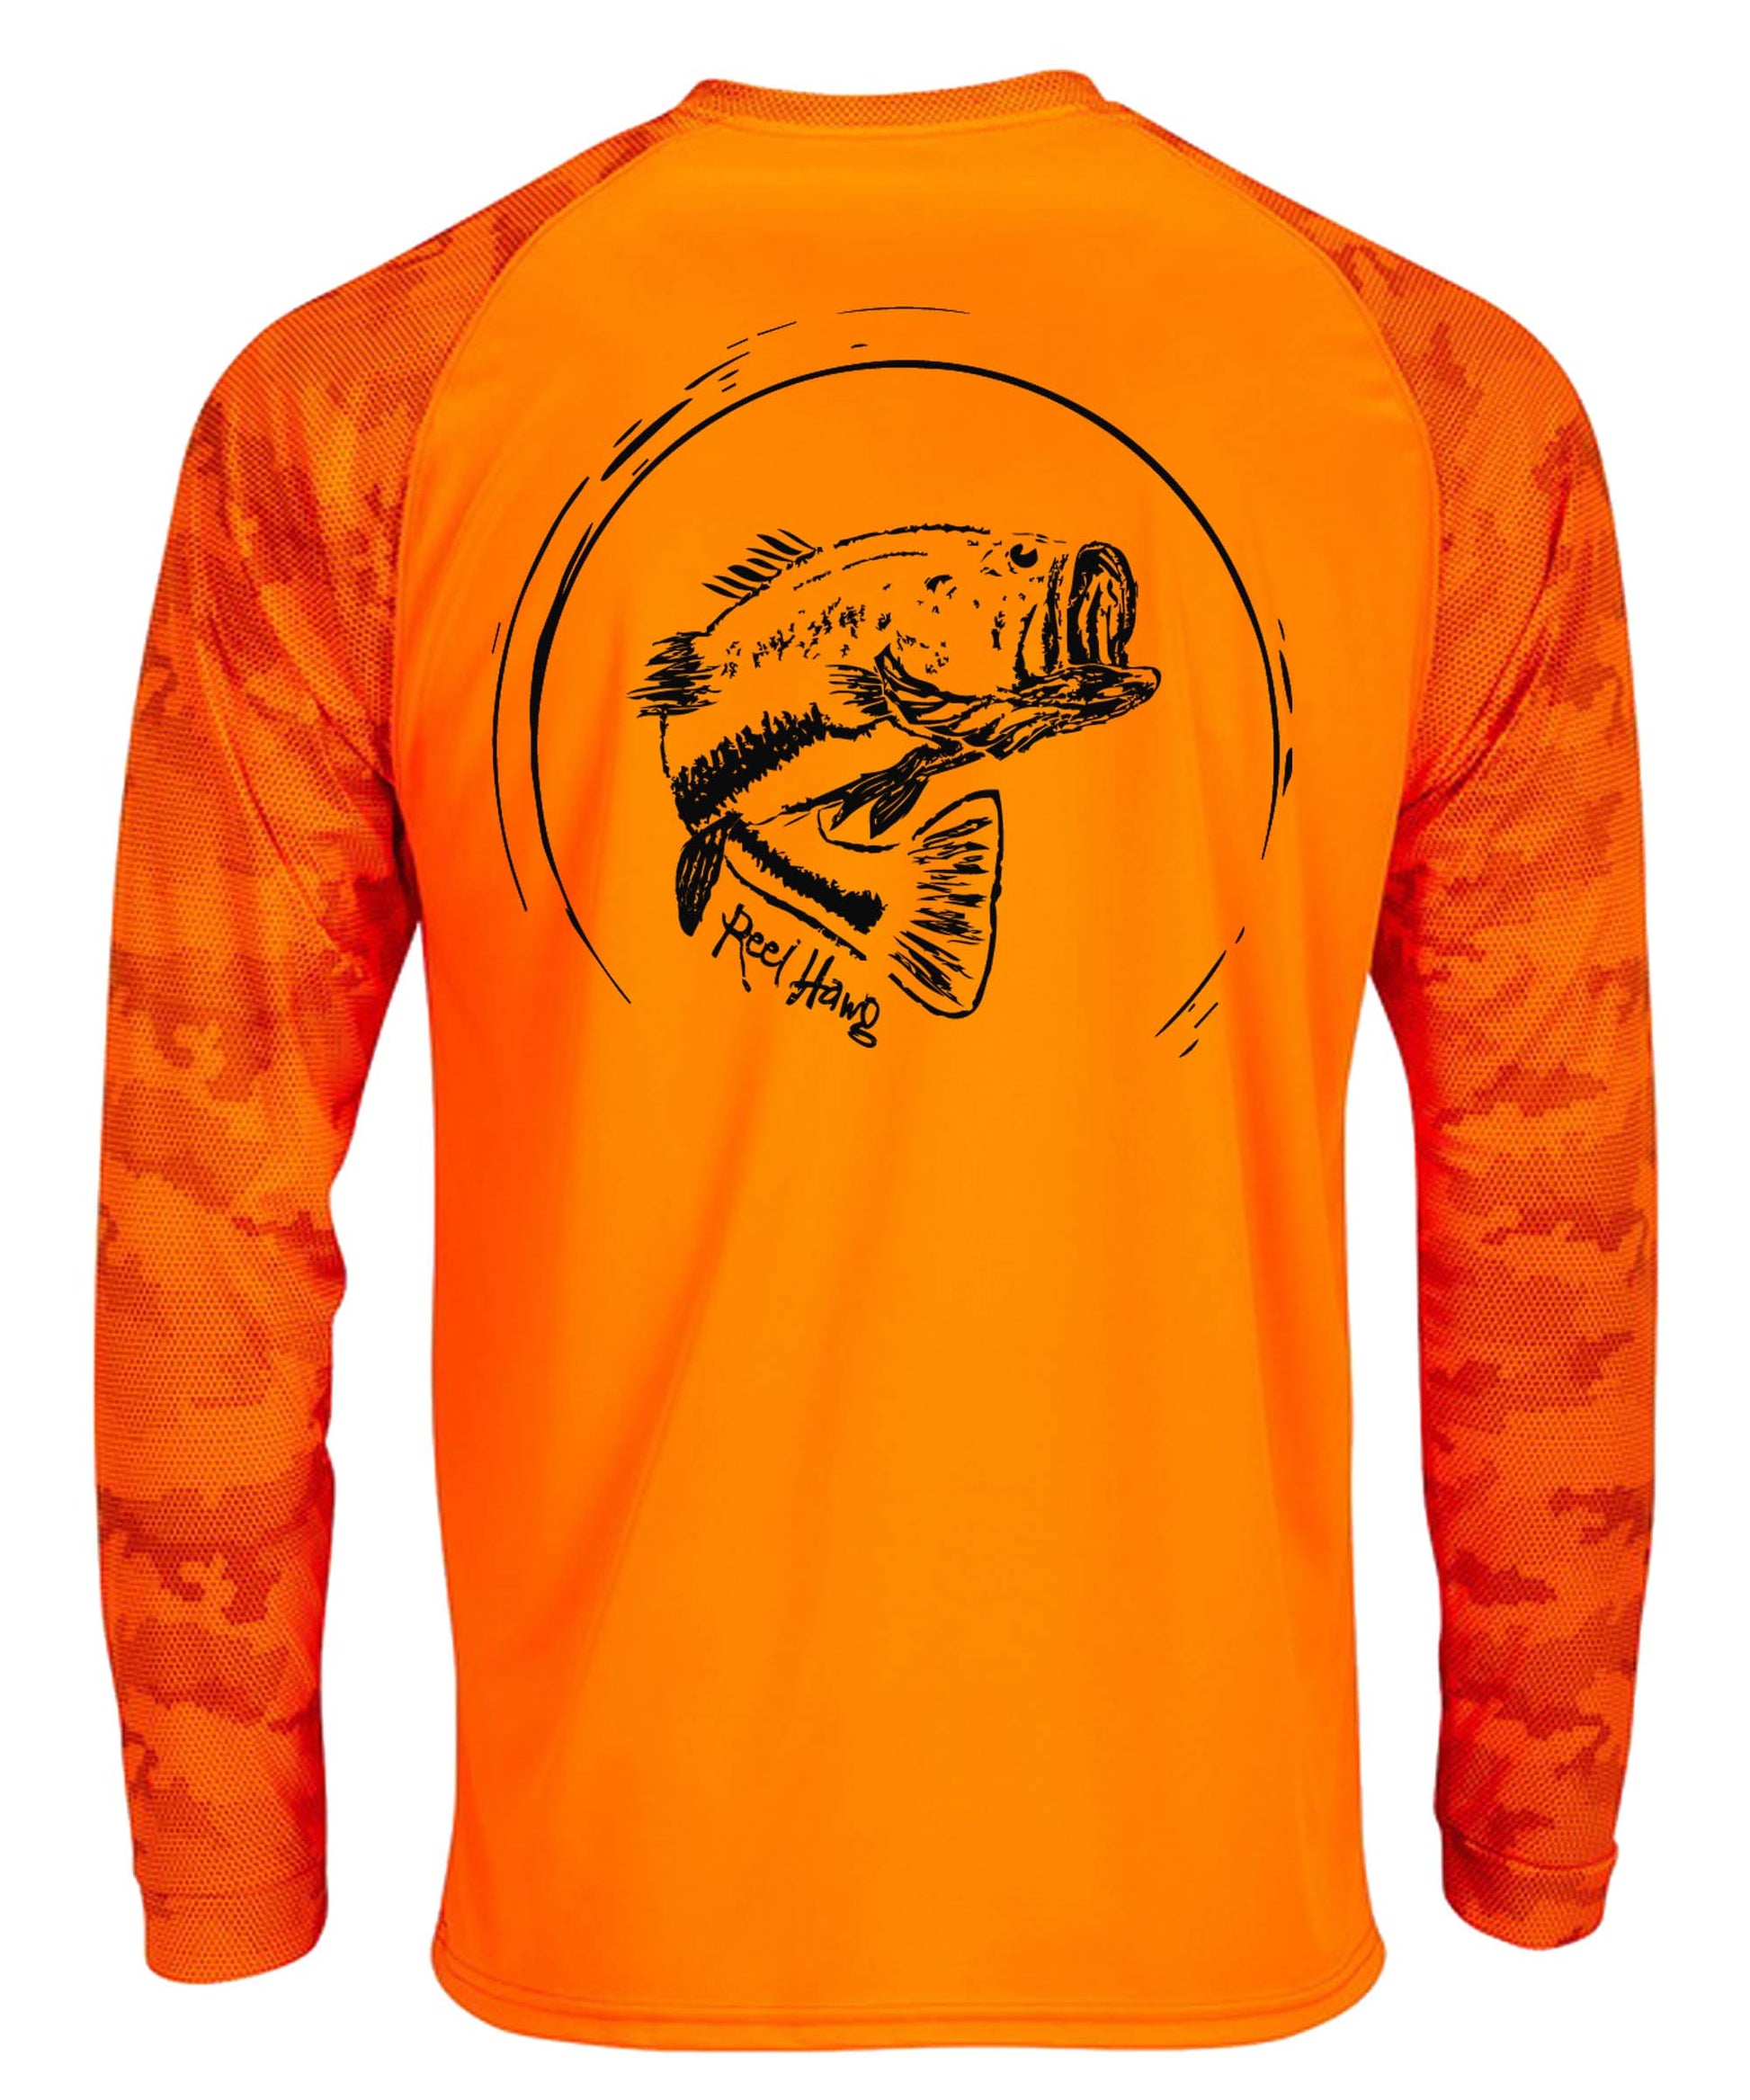 Koofin Gear Mens XL Performance White Orange Long Sleeve Fishing Shirt 